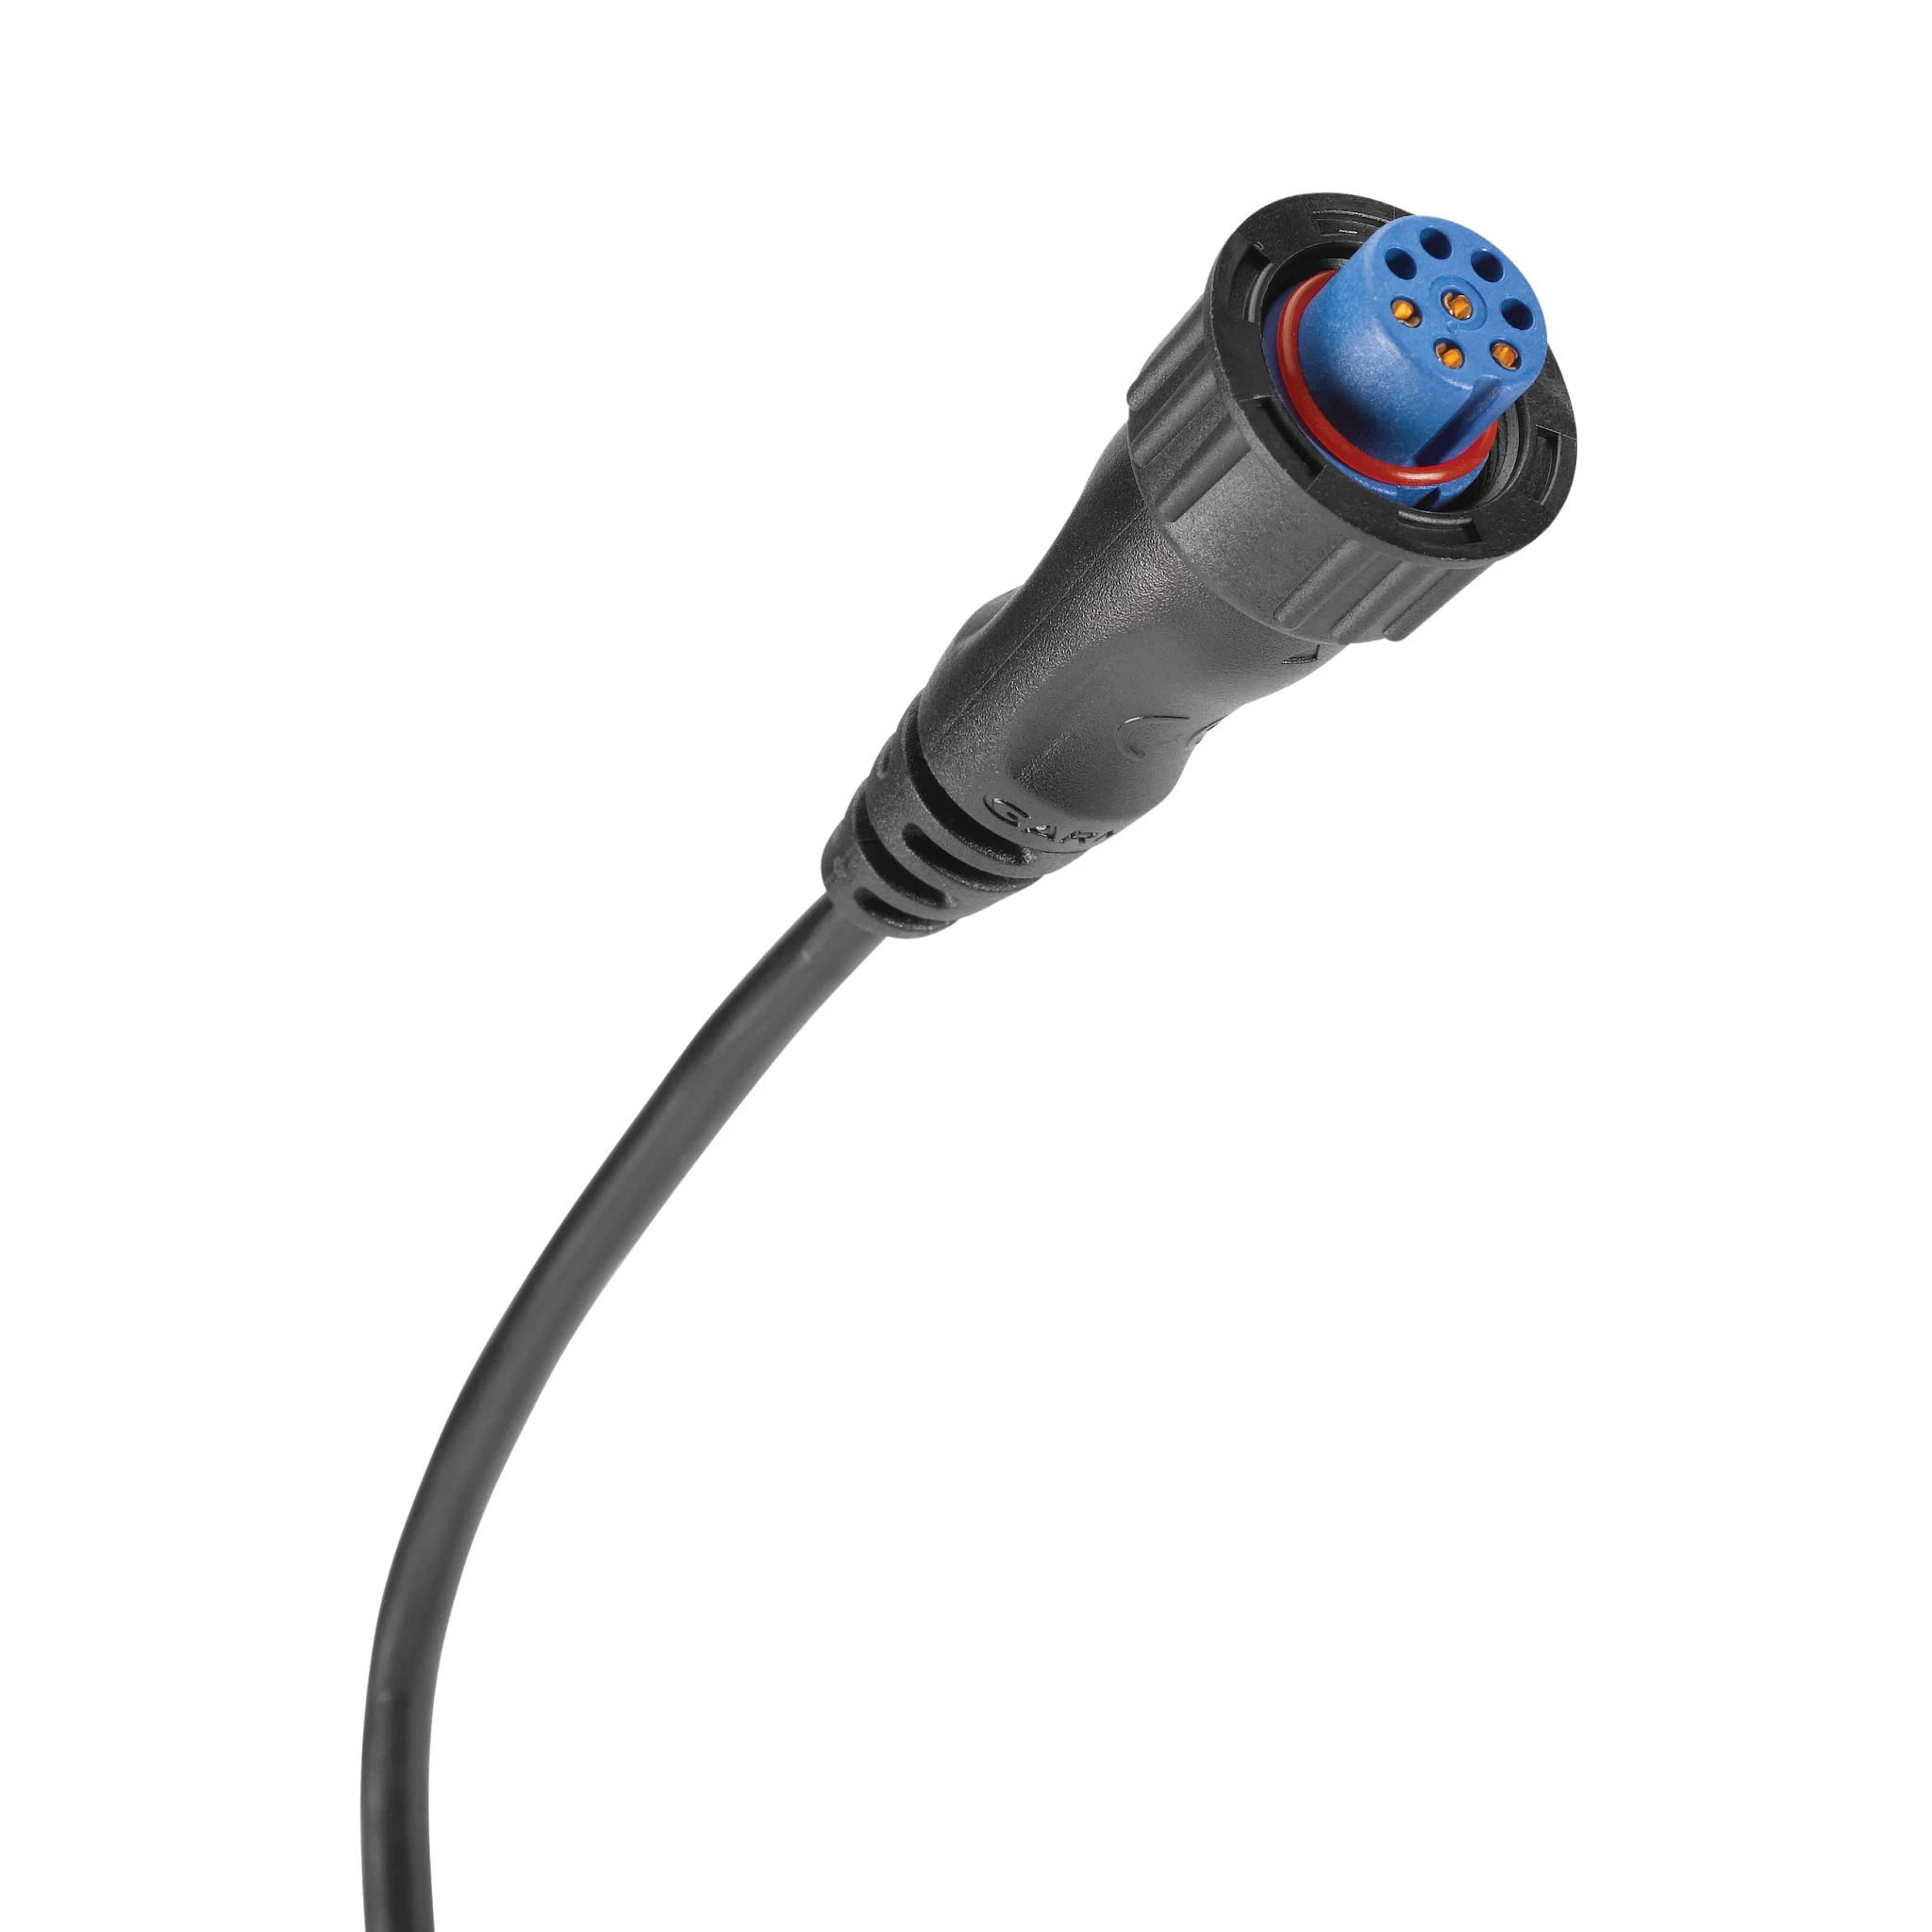 US2 Adapter Cable / MKR-US2-14 - Garmin 8-Pin